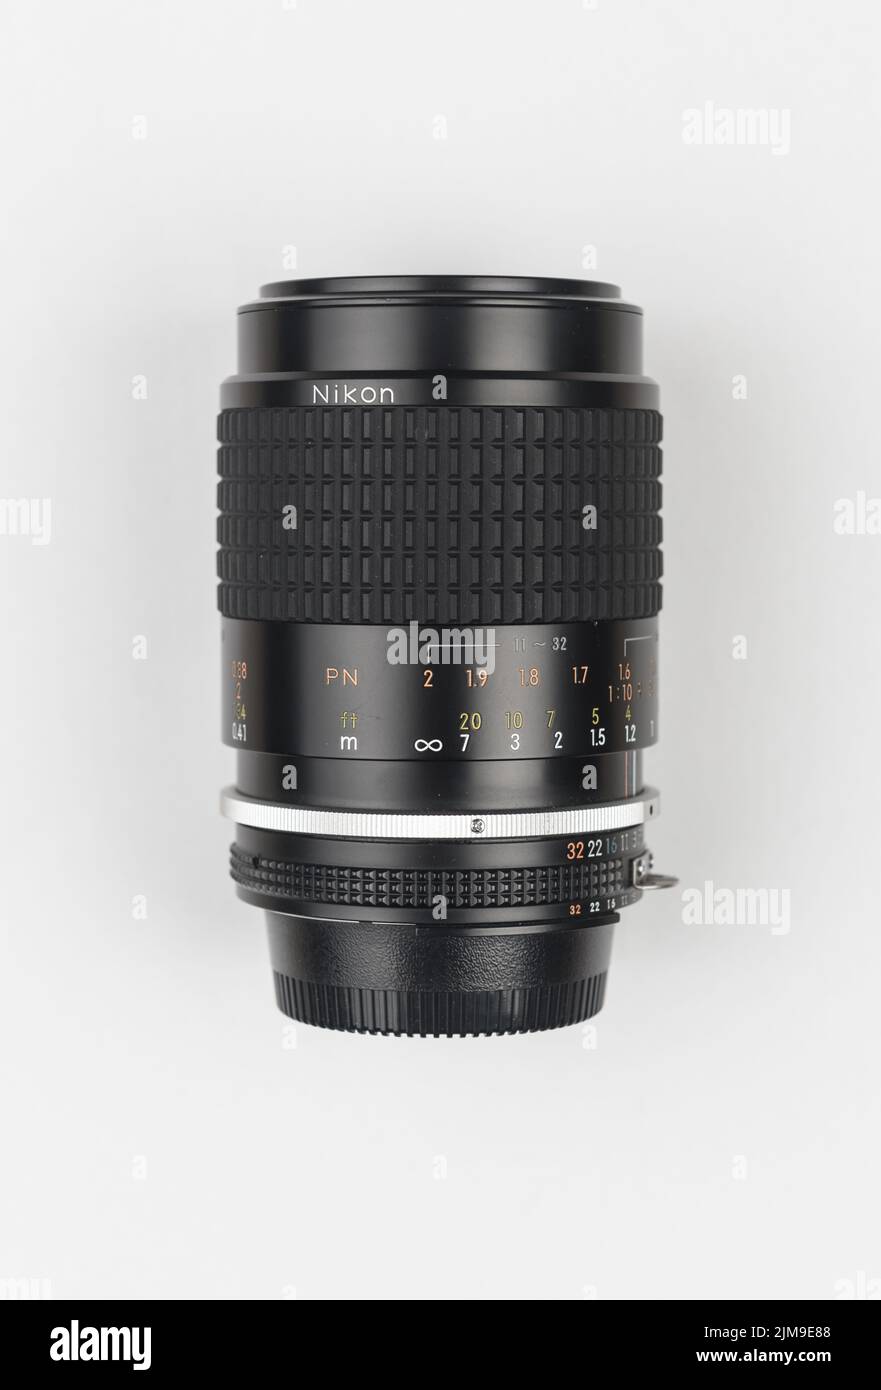 Nikon Micro-NIKKOR 105mm 2.8 manual focus lens isolated on white background Stock Photo